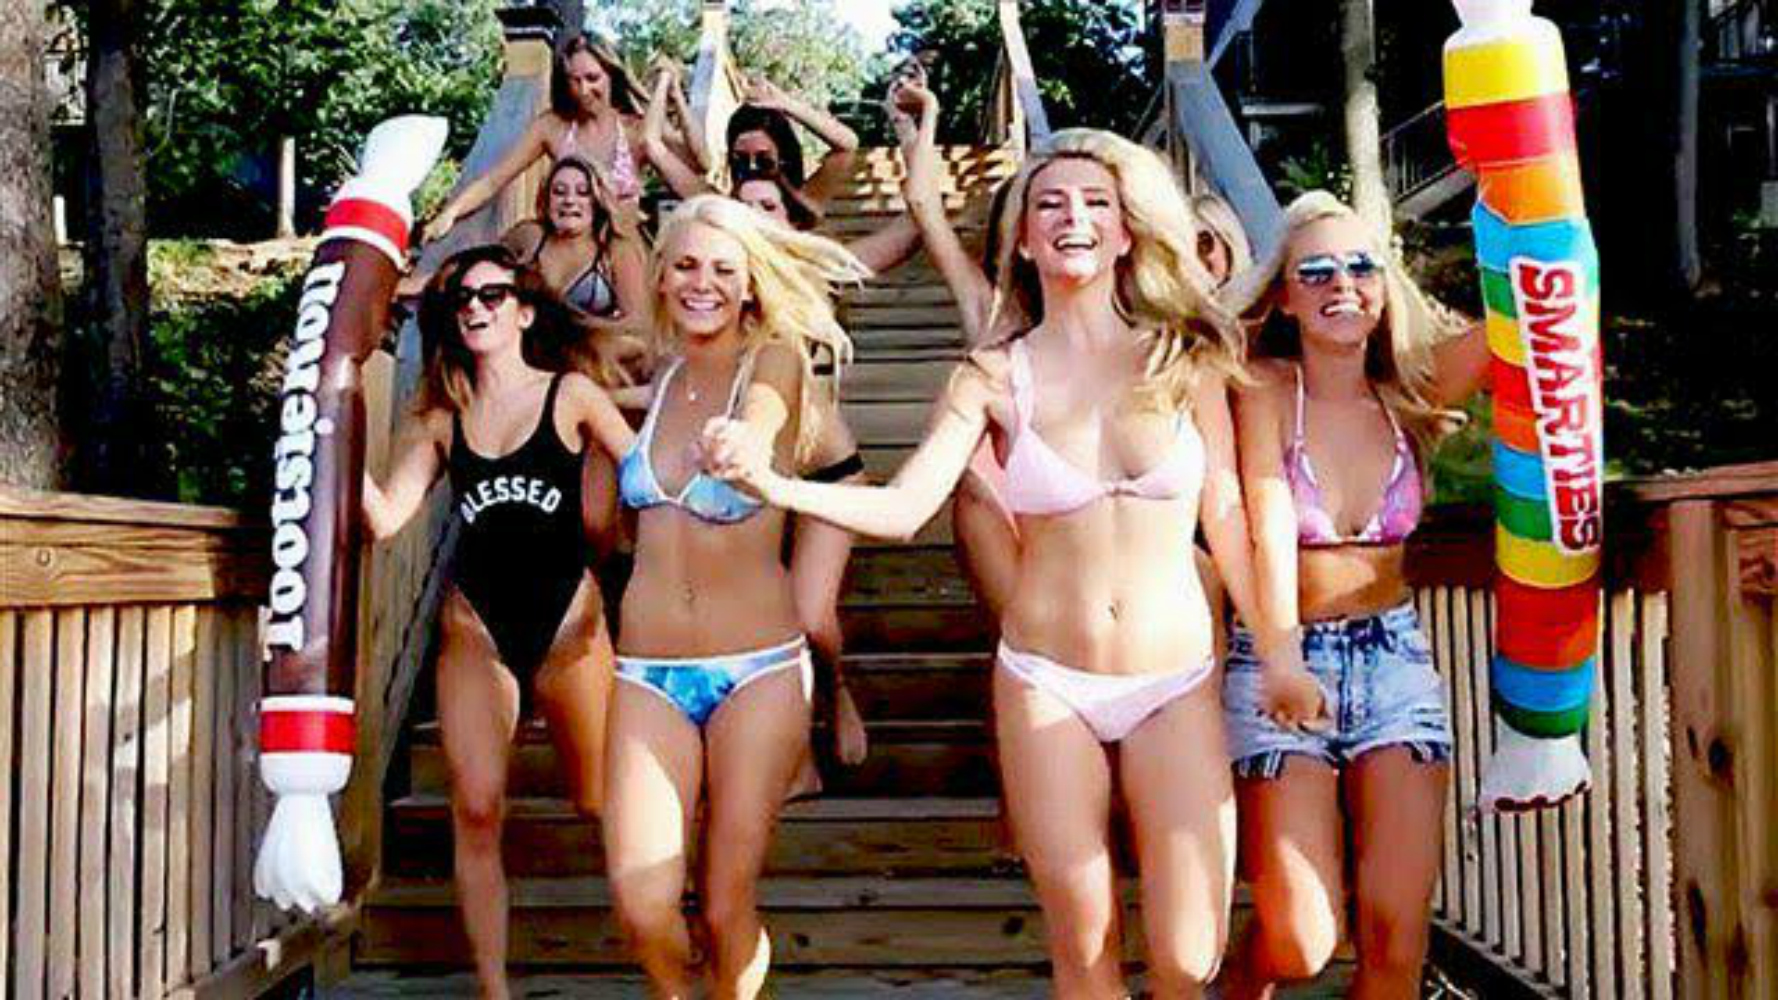 university girls sexy videos naked video pics